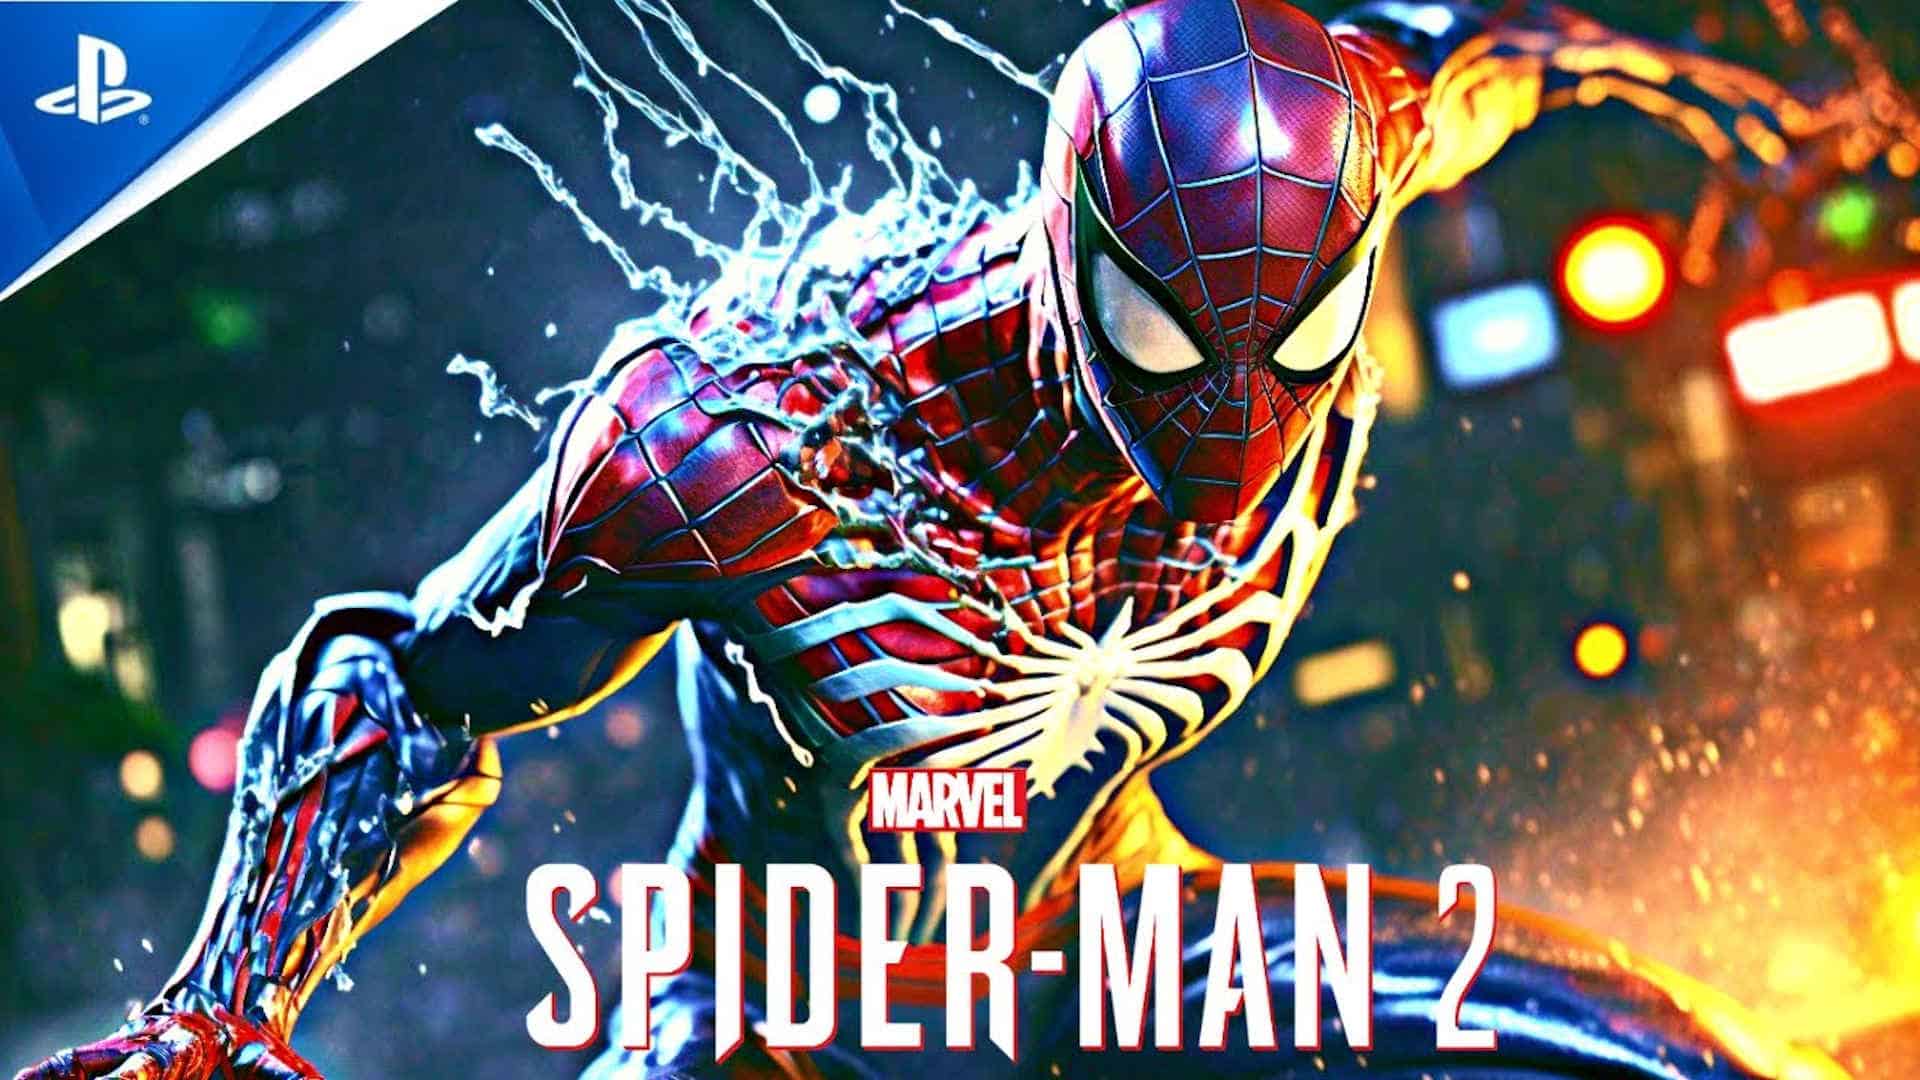 Marvel's Spider-Man 2 Collectibles